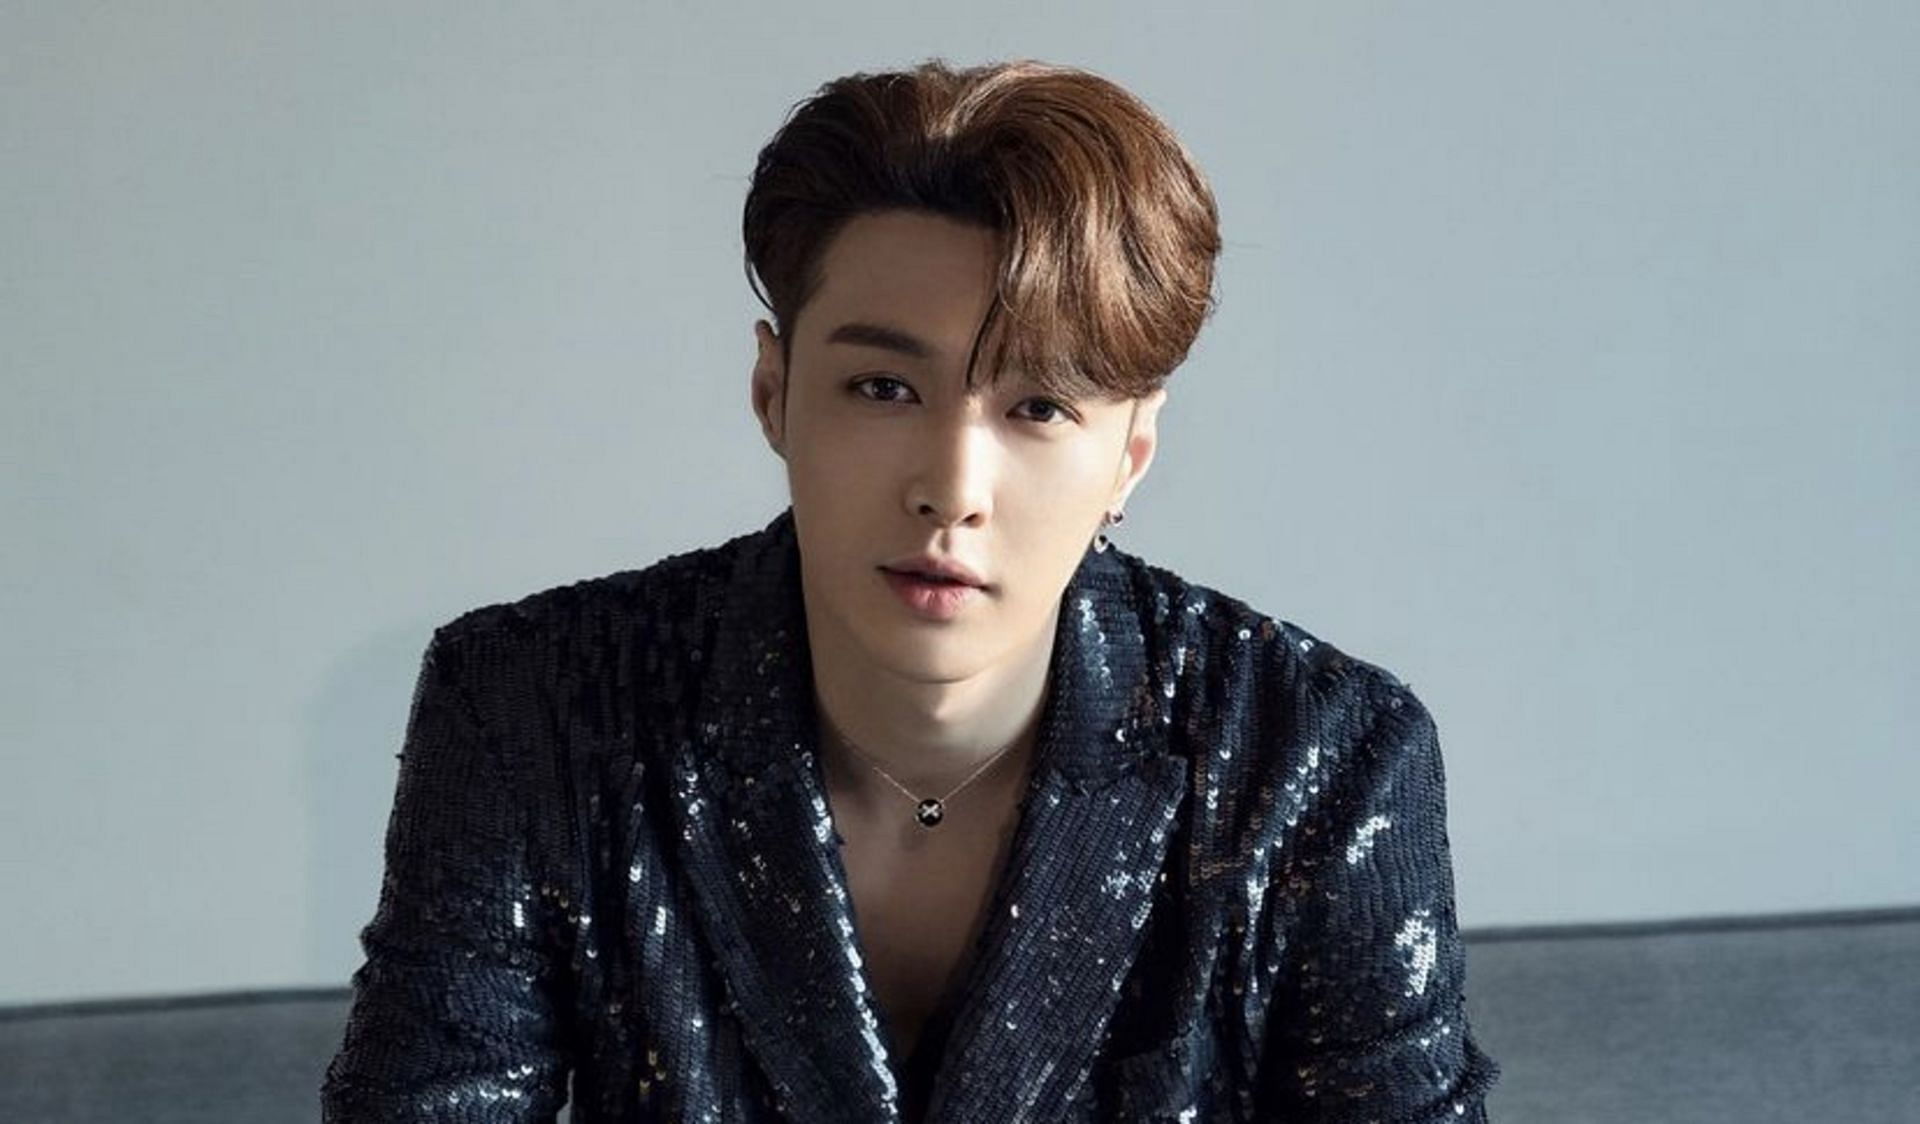 A still of the K-pop artist (Image via Instagram/layzhang)